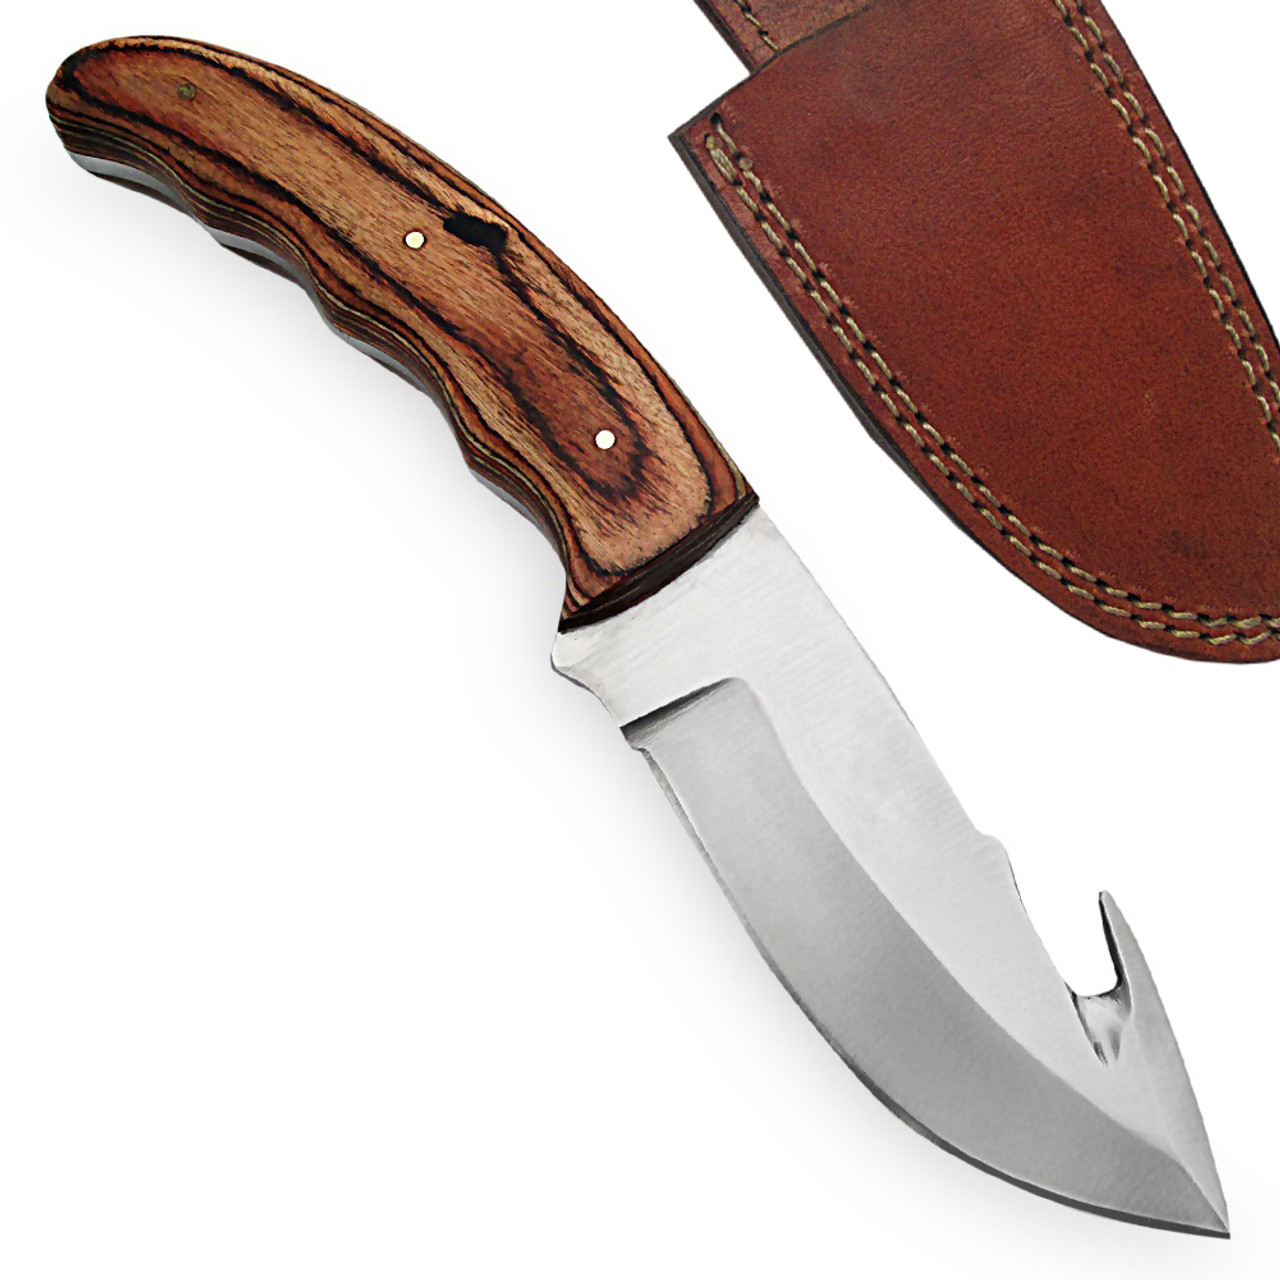 Hunting Full Tang Kentucky Outfitter Gut Hook Knife